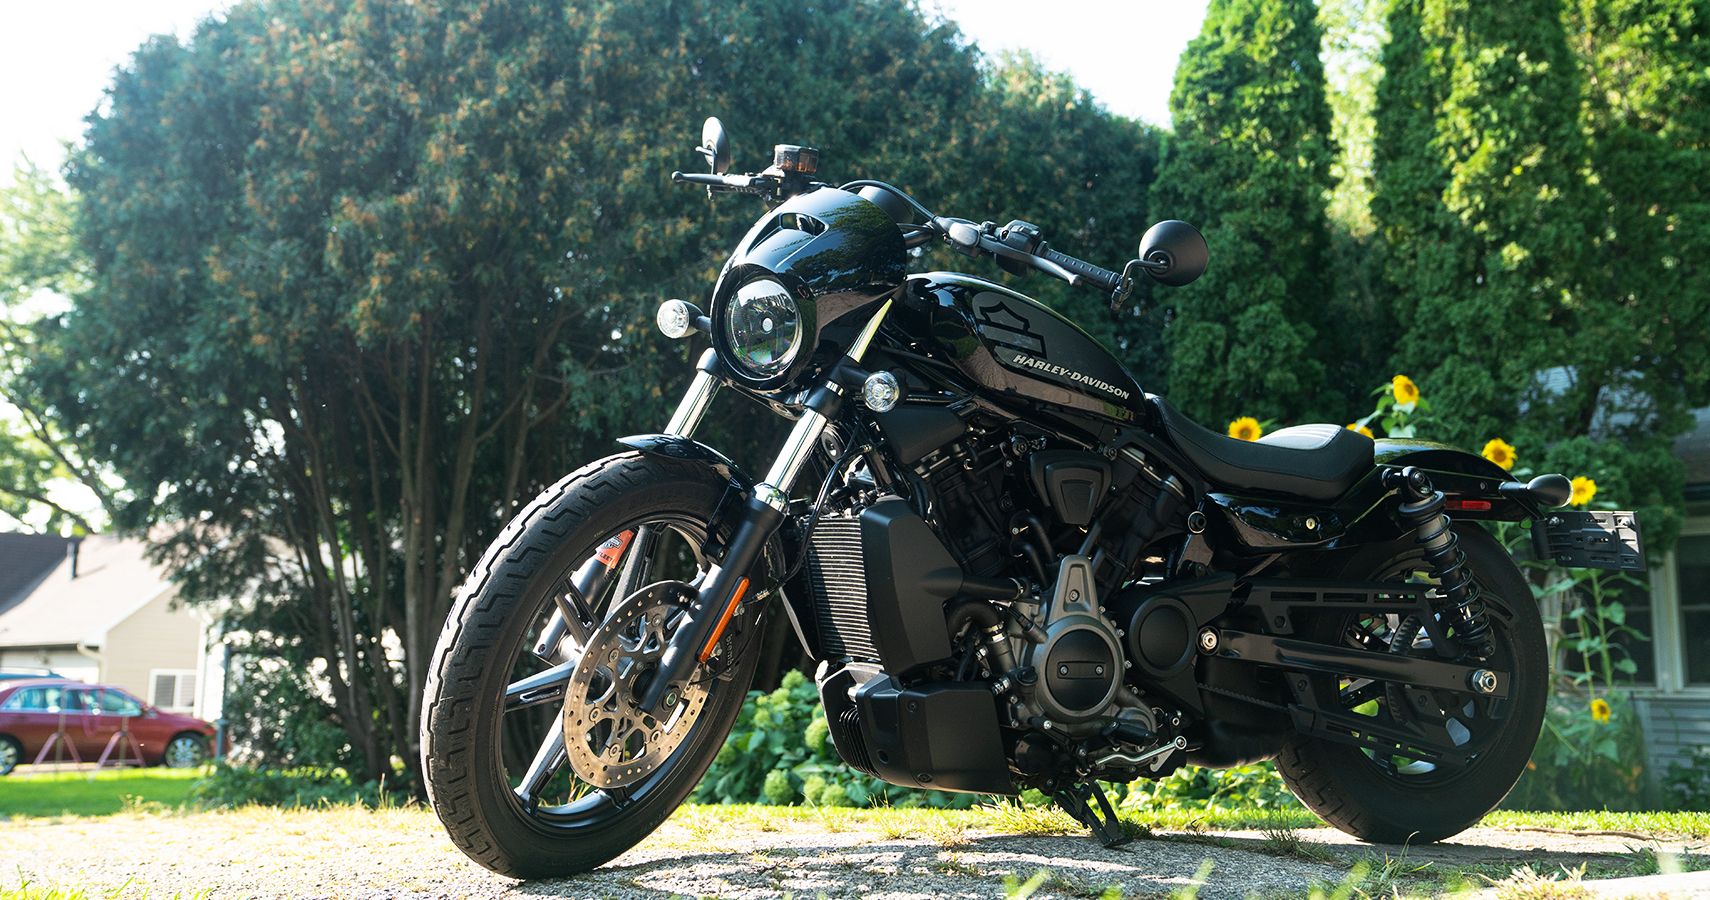 2022 Harley-Davidson Nightster side